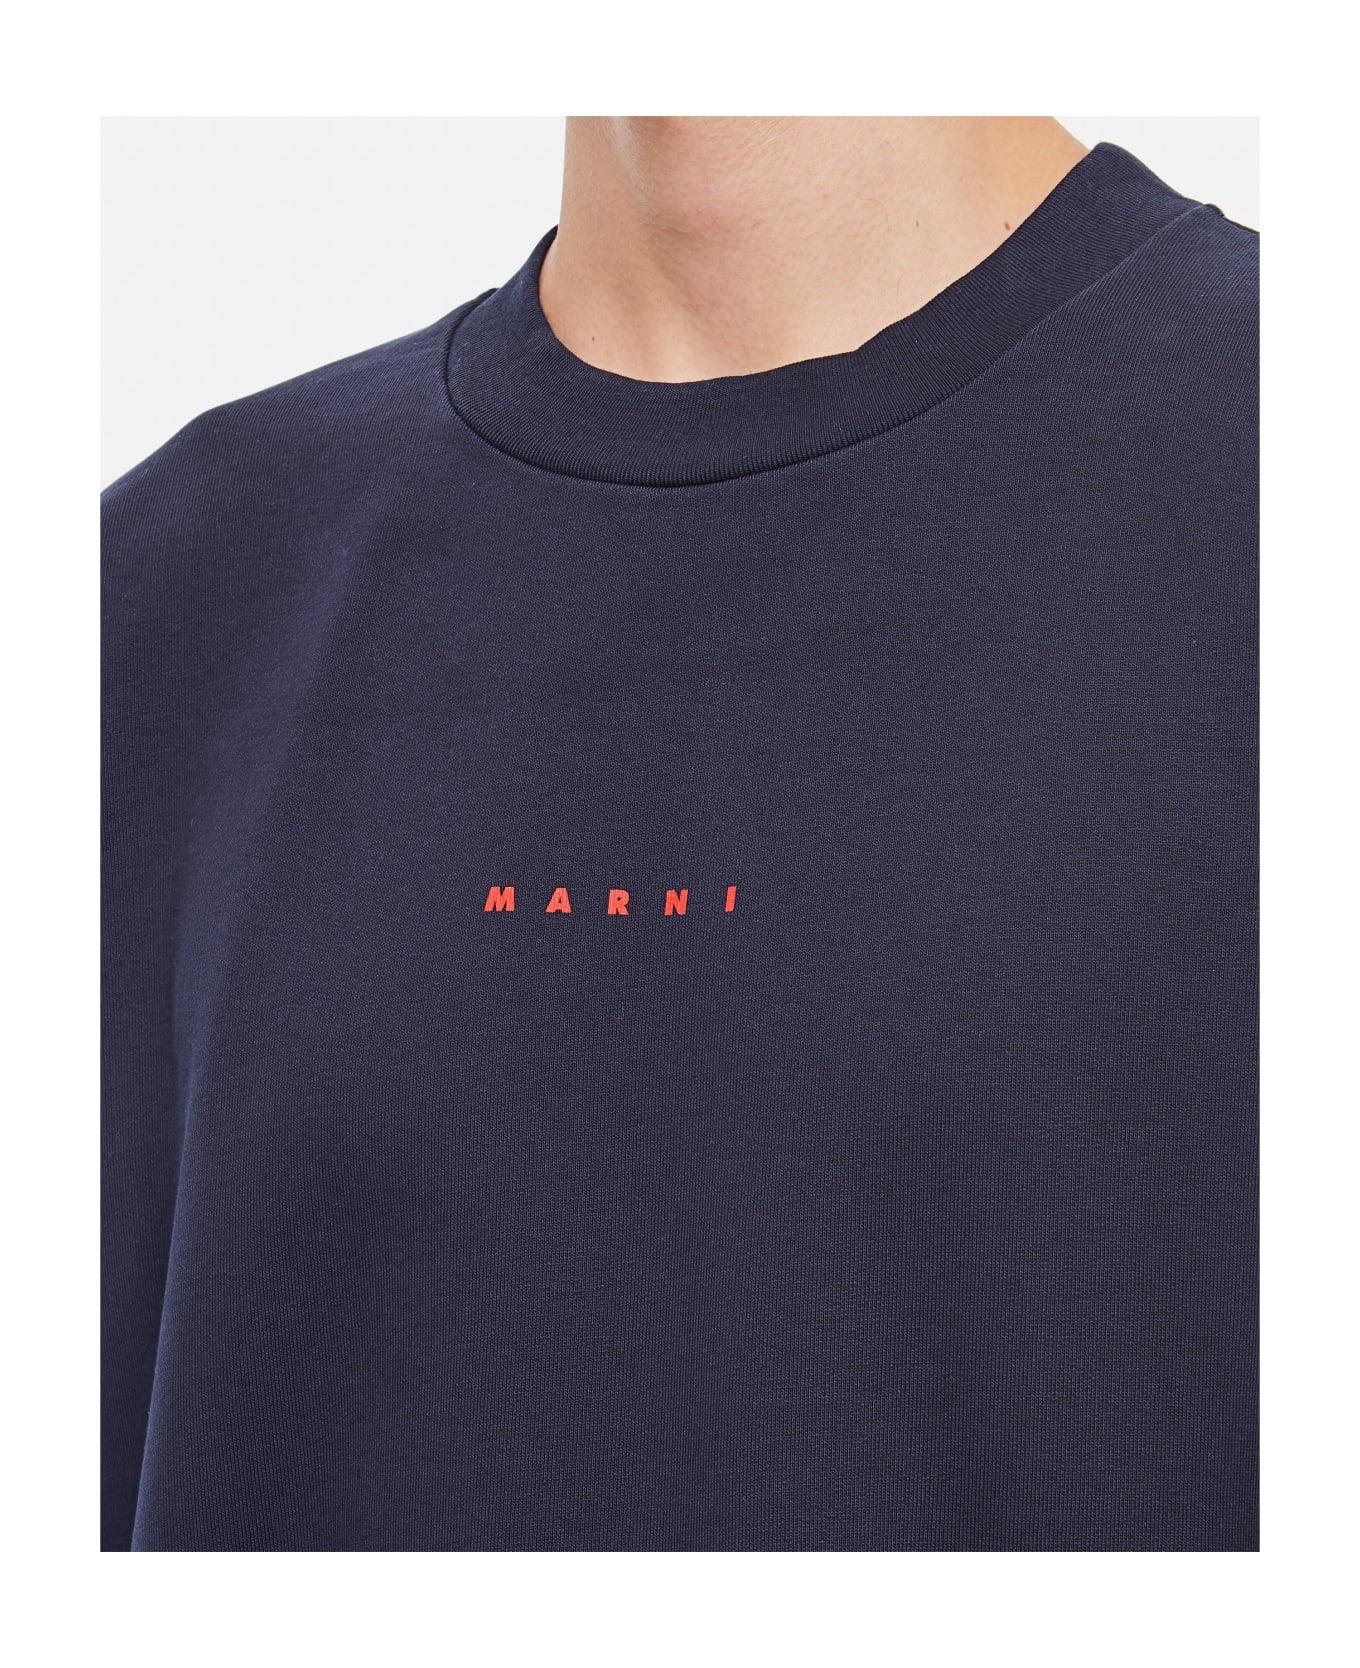 Marni Cotton Sweatshirt - Blumarine